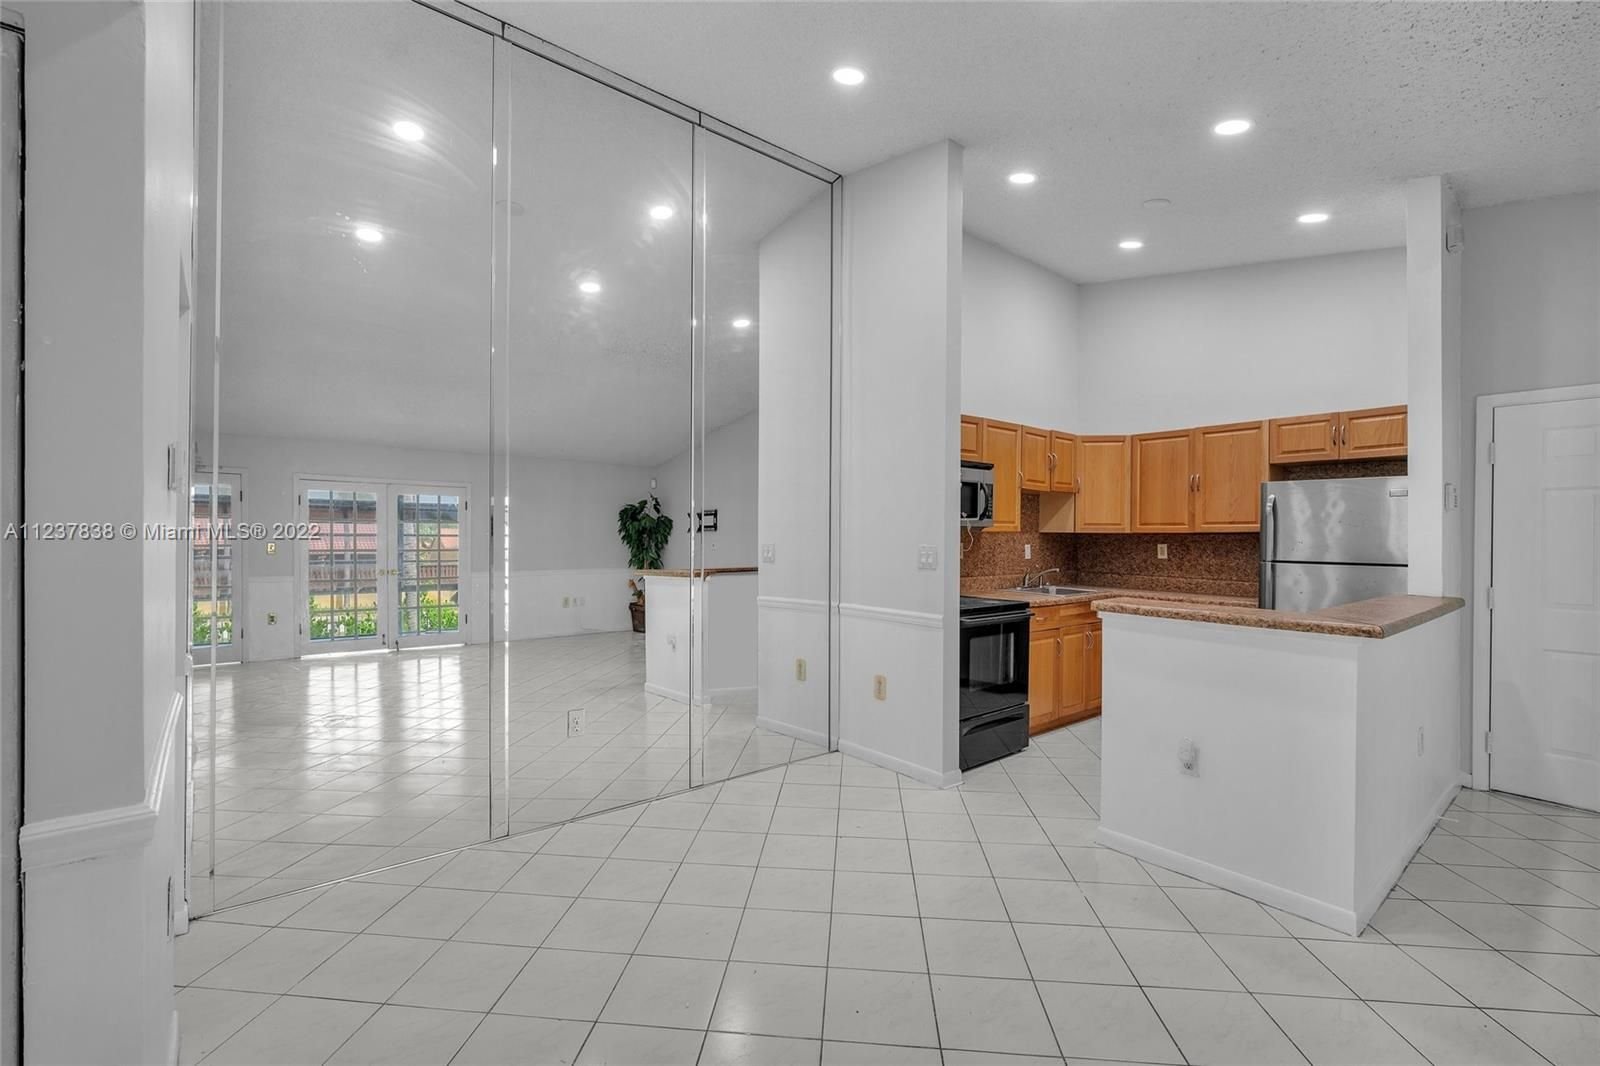 Real estate property located at 929 199th St #203, Miami-Dade County, Miami, FL